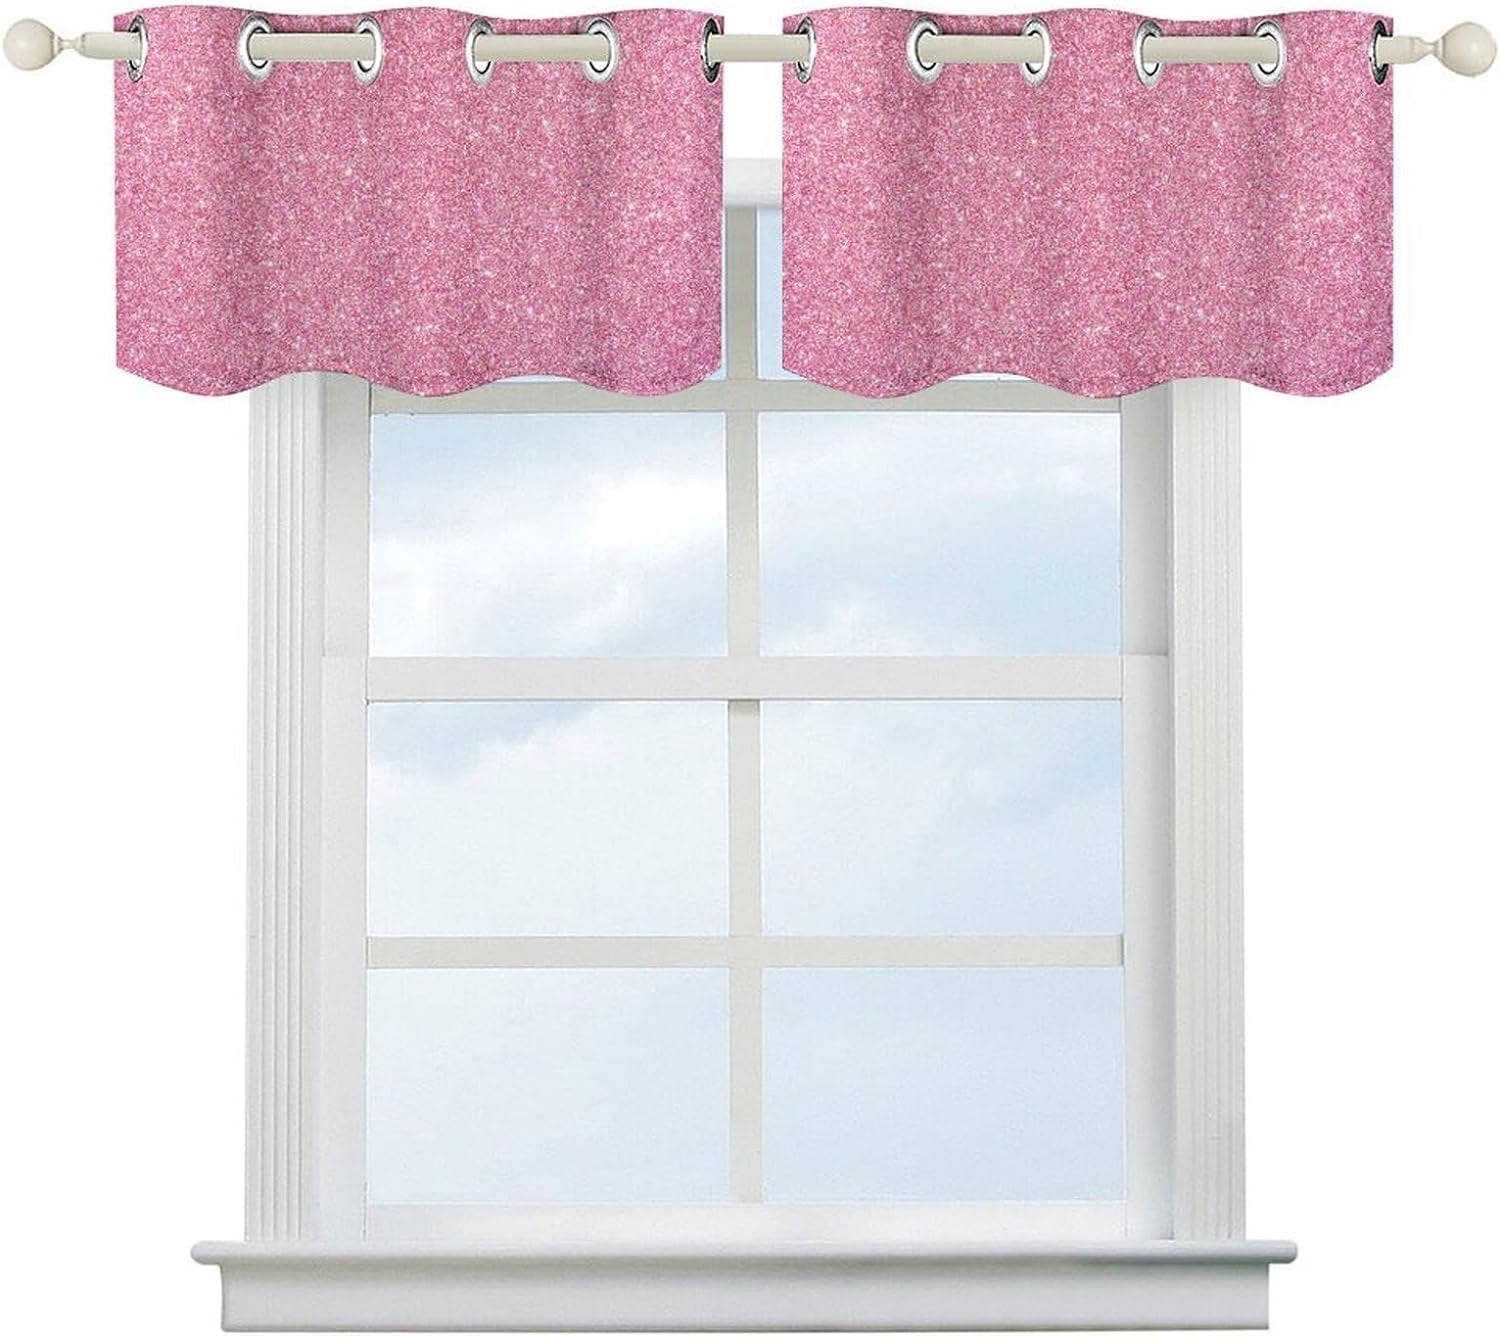 2Pack Short Valance Curtains 3D Shiny Bling Kitchen Curtains Valances for Windows Bedroom Livingroom Pink Glitter Decor Grommet Blackout Window Treatment Valances 52" W X 18" L